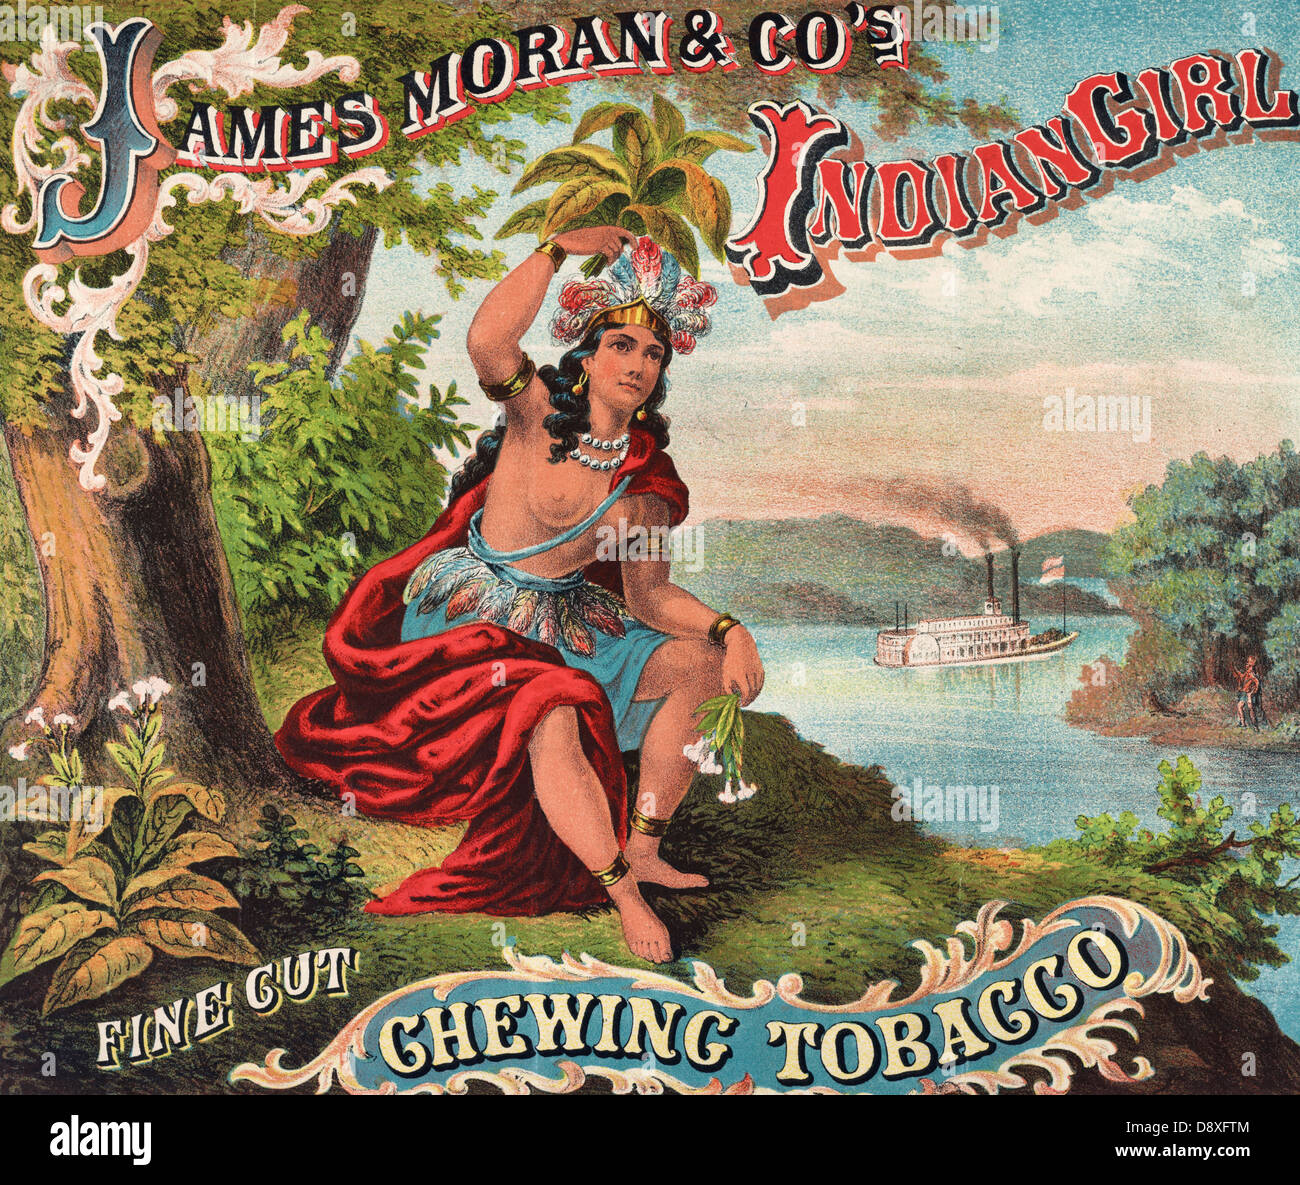 James Moran & Company's Indian Girl Chewing Tobacco - Tobacco Label, circa 1874 Stock Photo